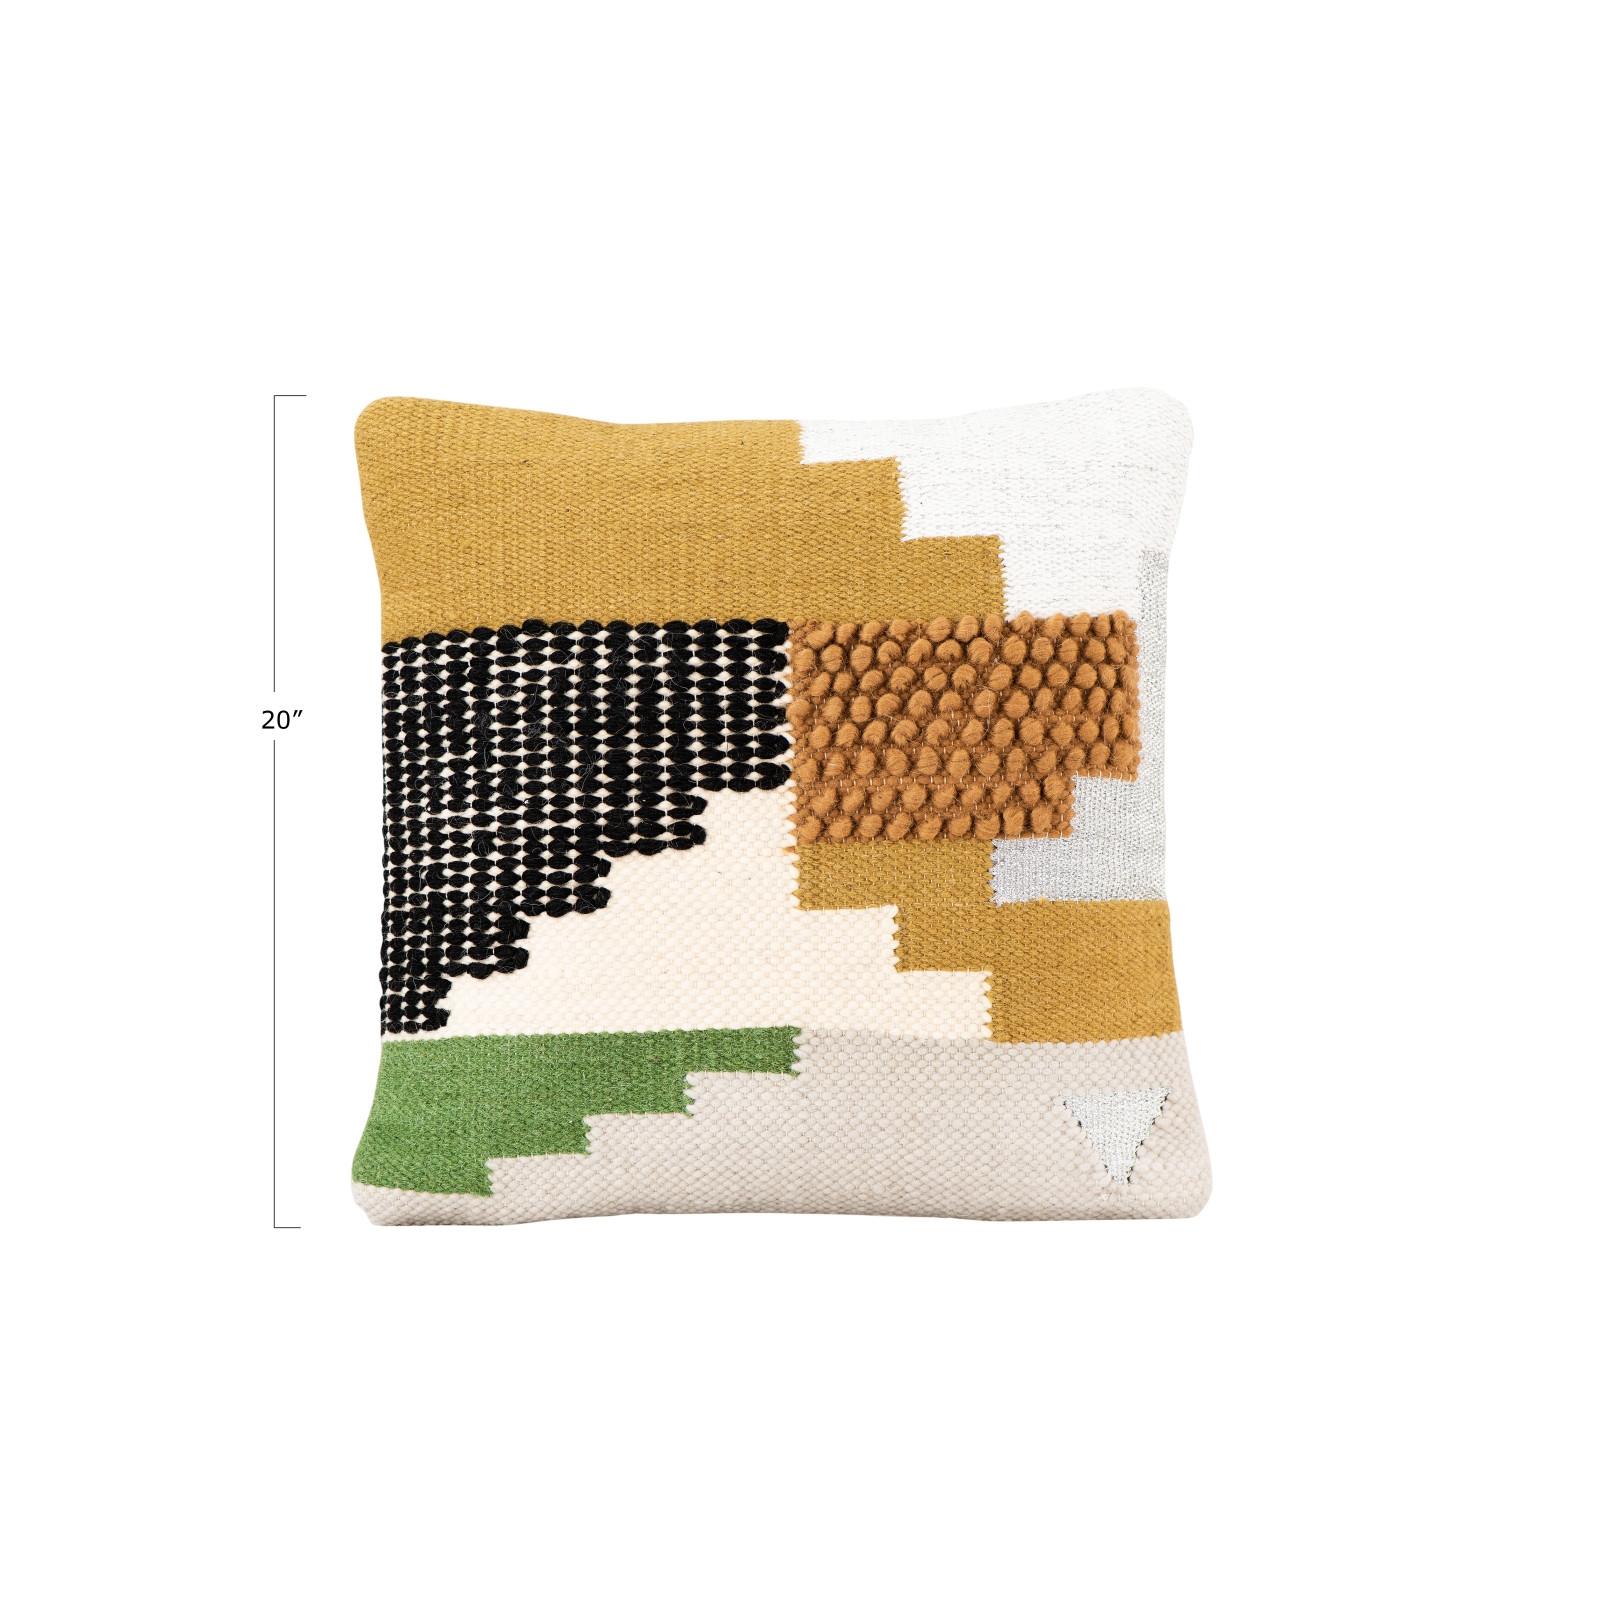 Handwoven Wool Kilim Pillow, White, Yellow, Green & Black, 20" x 20" - Image 2